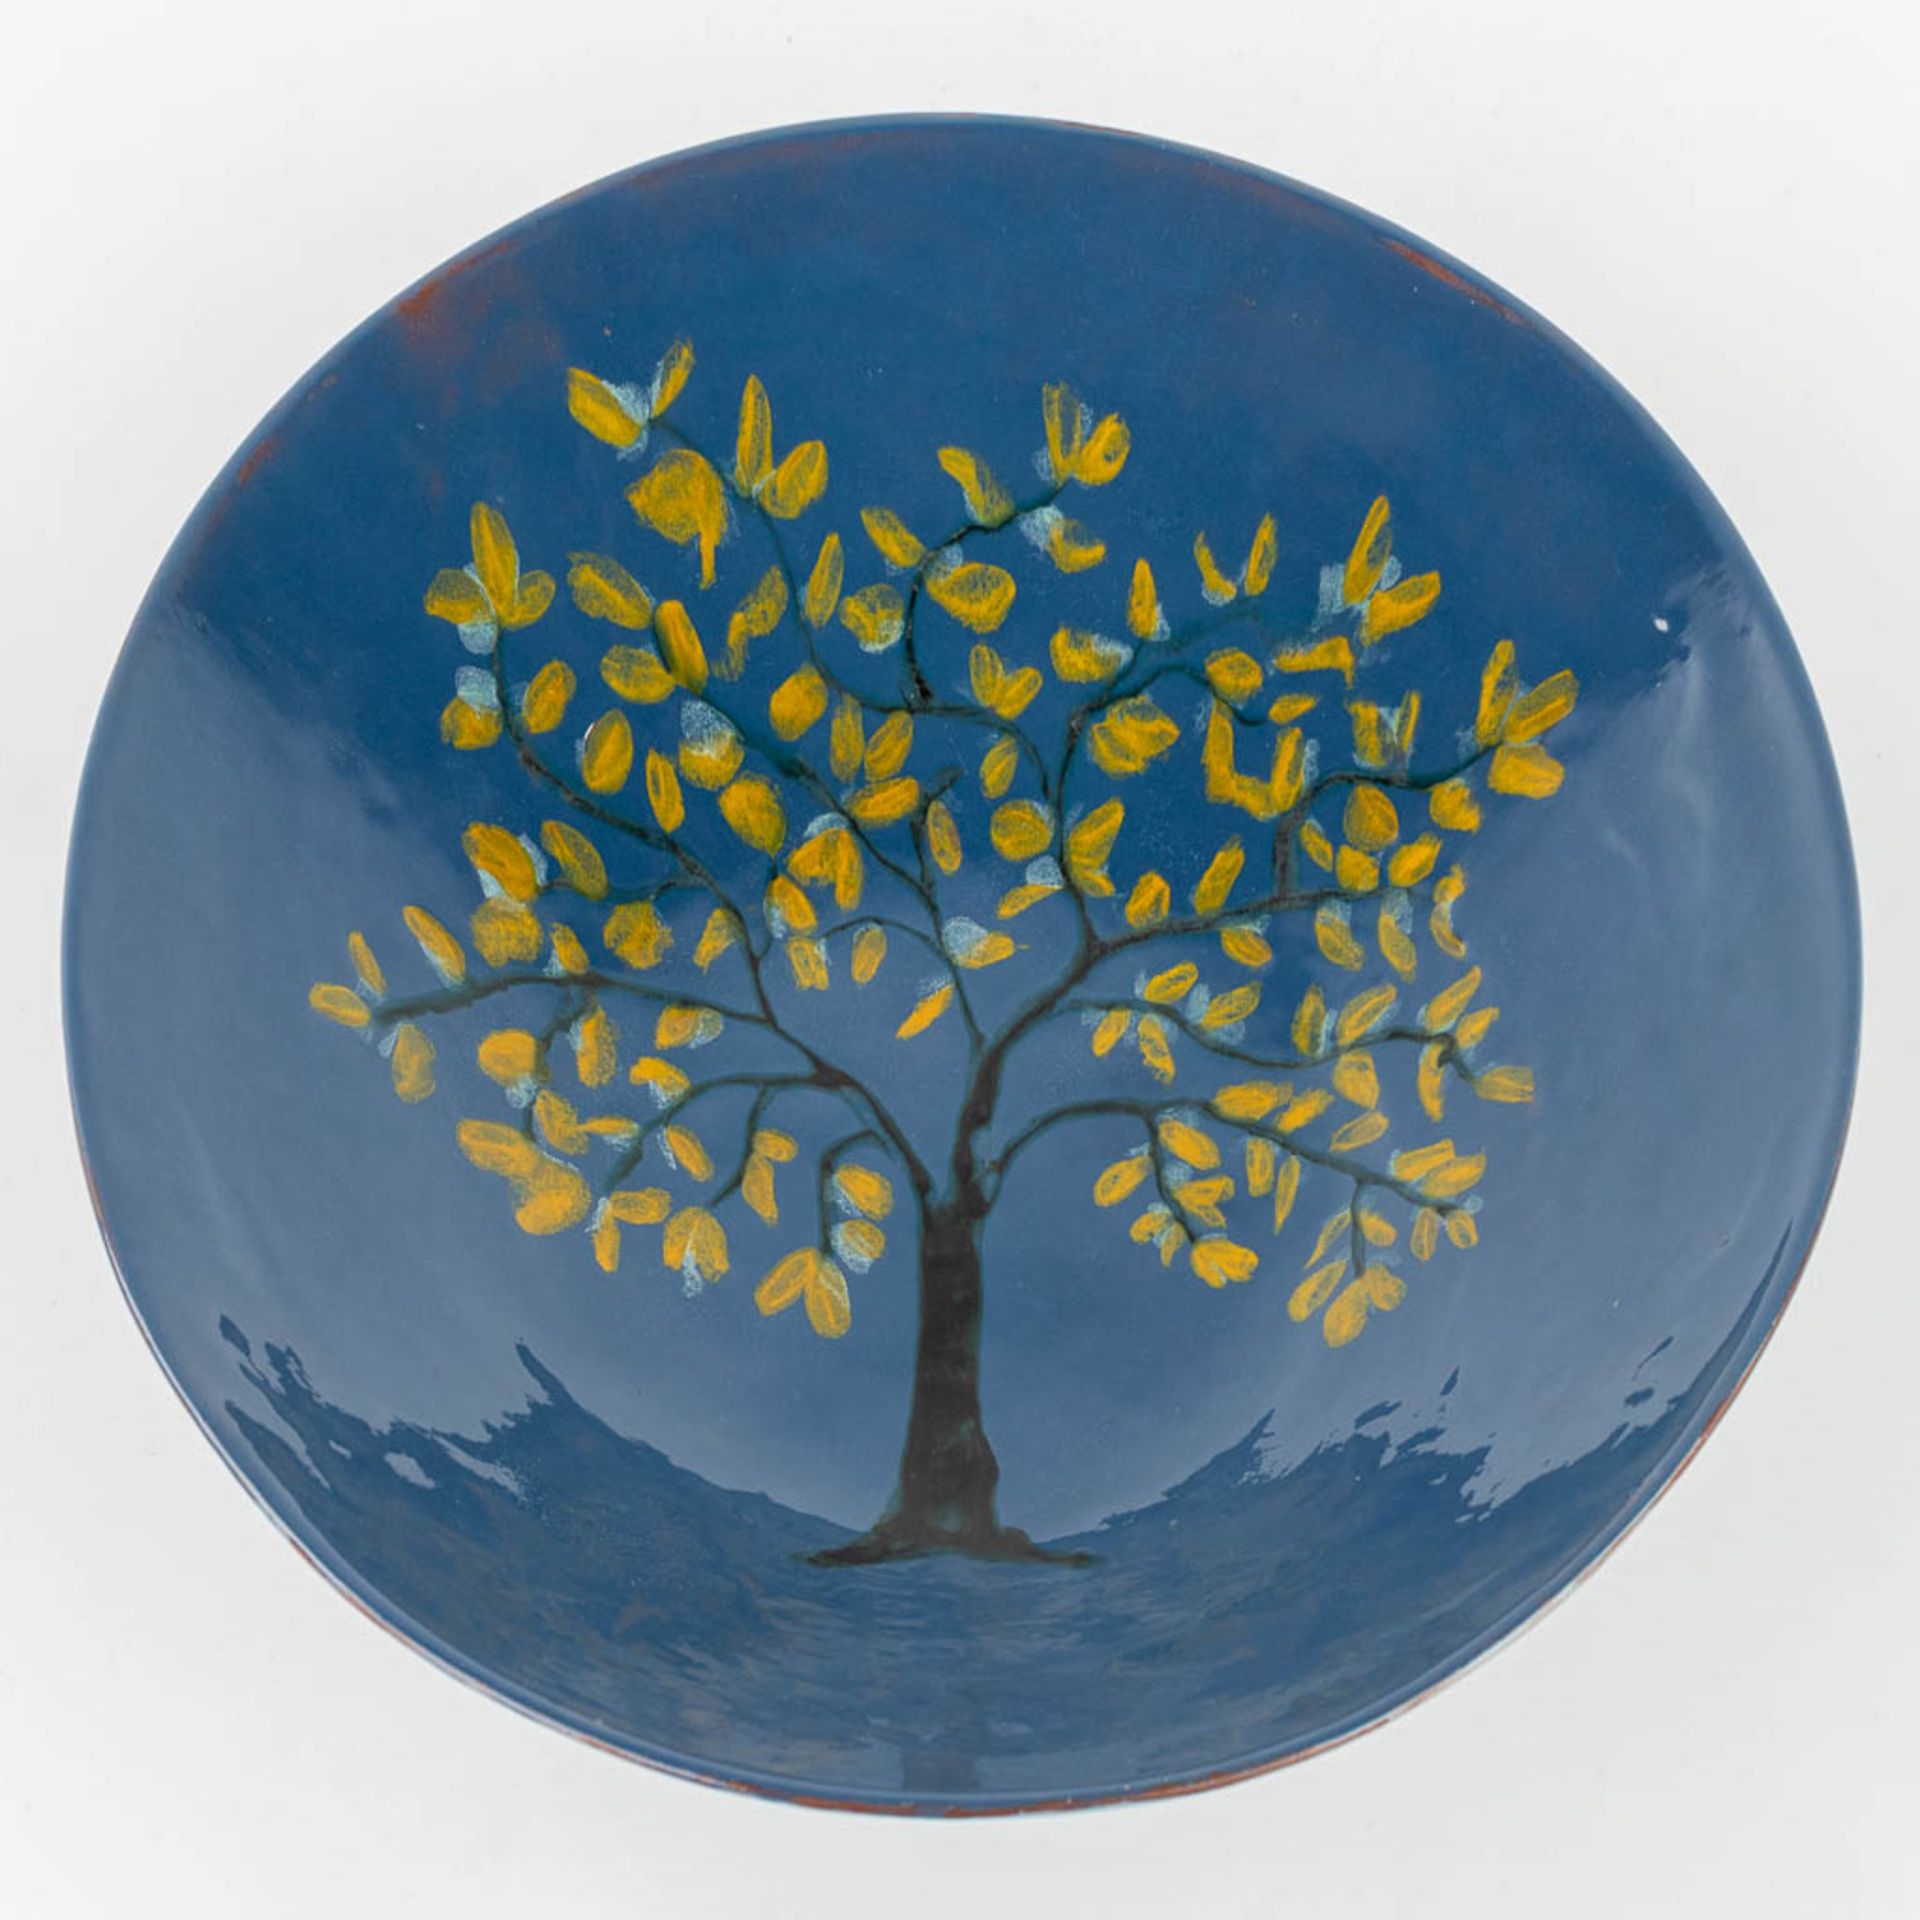 Beatty PERMEKE (1916-1991) 'Bowl' glazed ceramics. (H:8 x D:33,5 cm) - Image 8 of 10